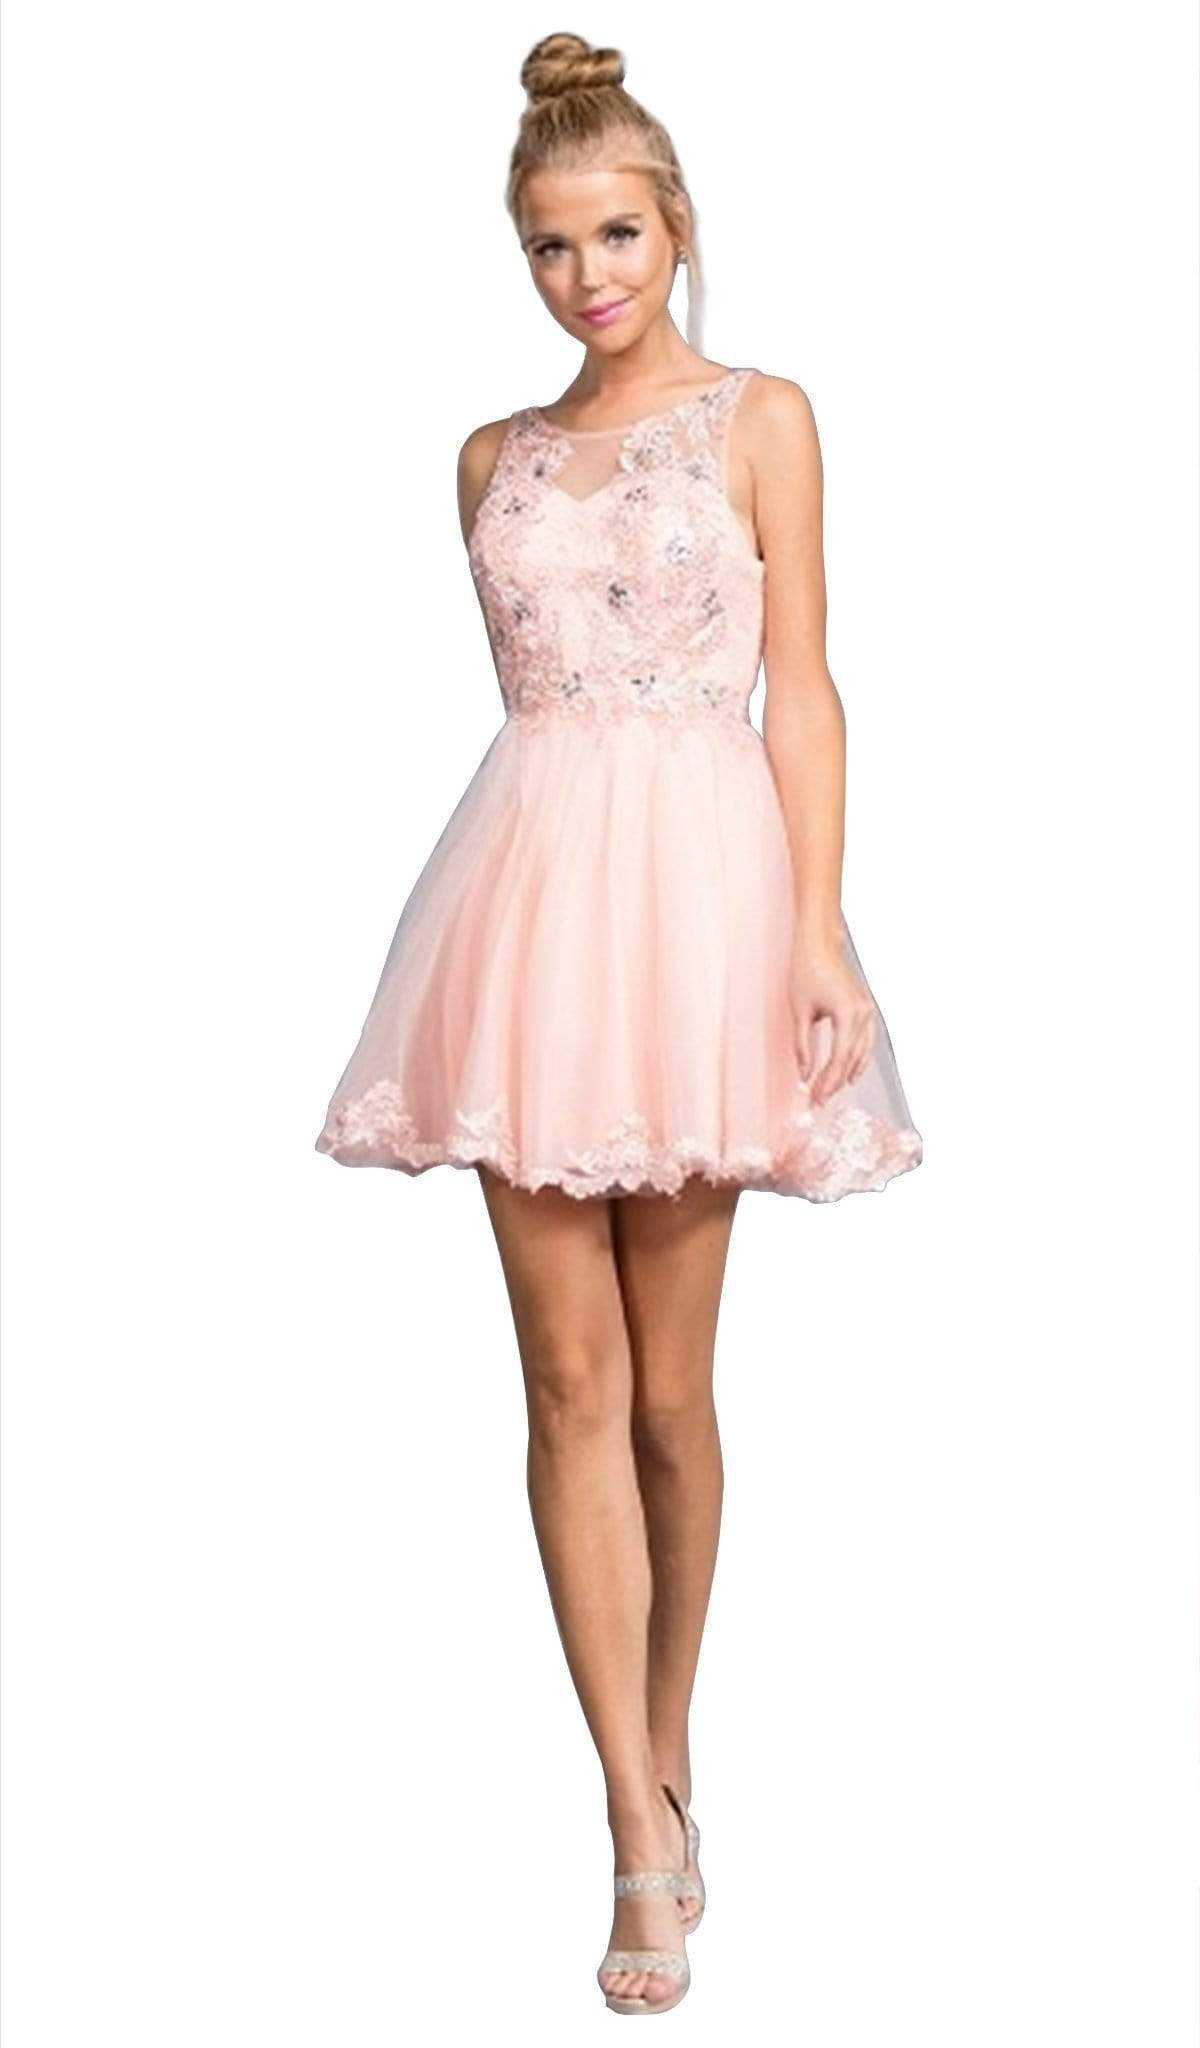 Aspeed Design, Aspeed Design - Floral Applique A-line Homecoming Dress